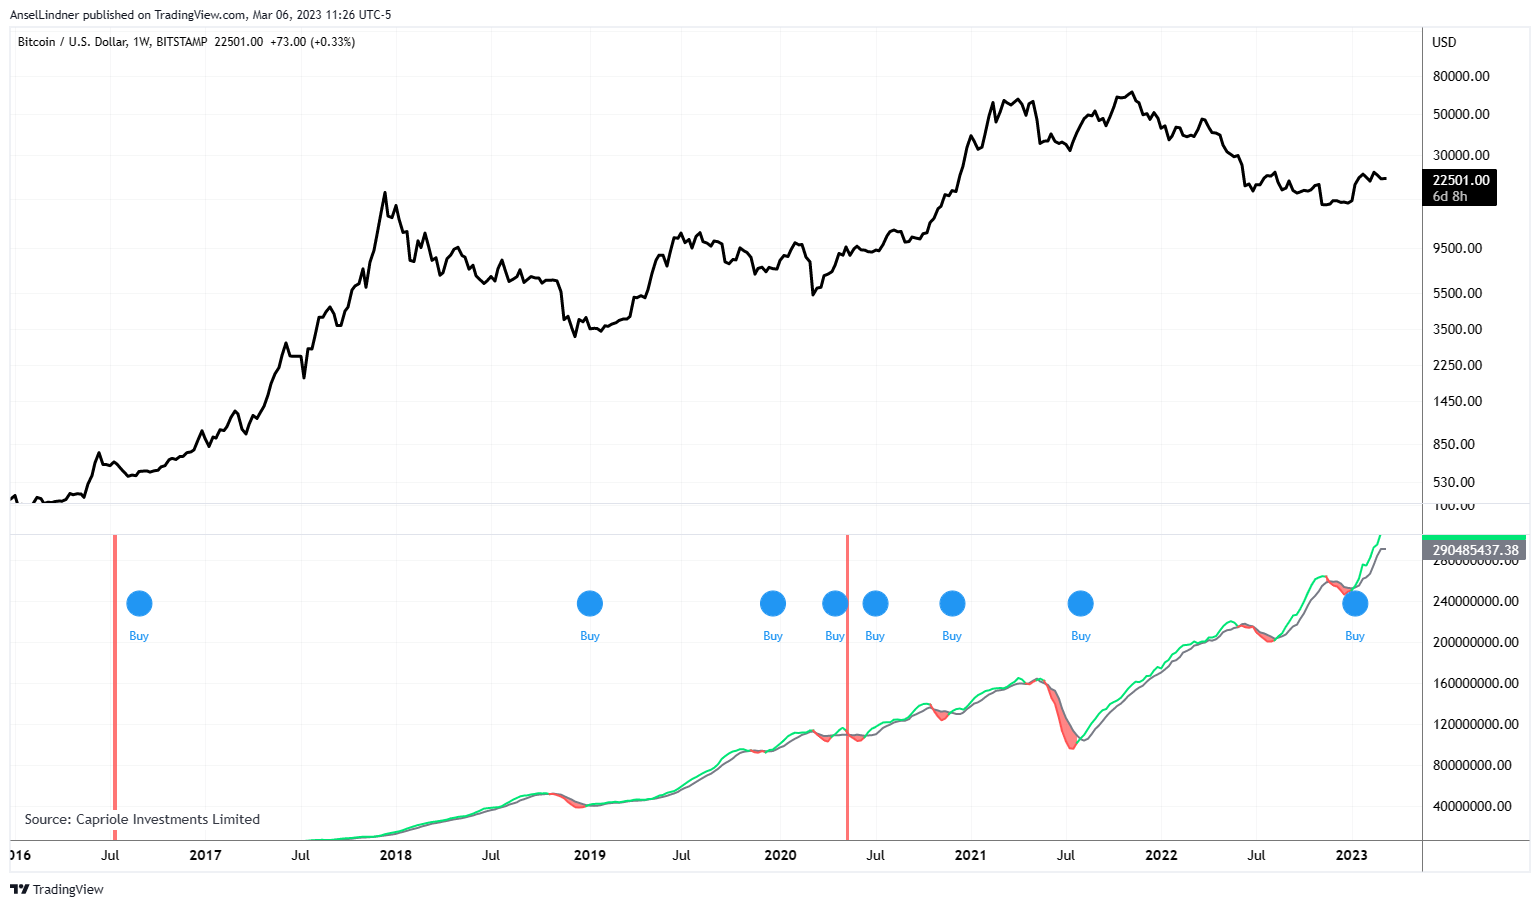 Bitcoin hash ribbons with Buy signalsBitcoin hash ribbons with Buy signals vs price